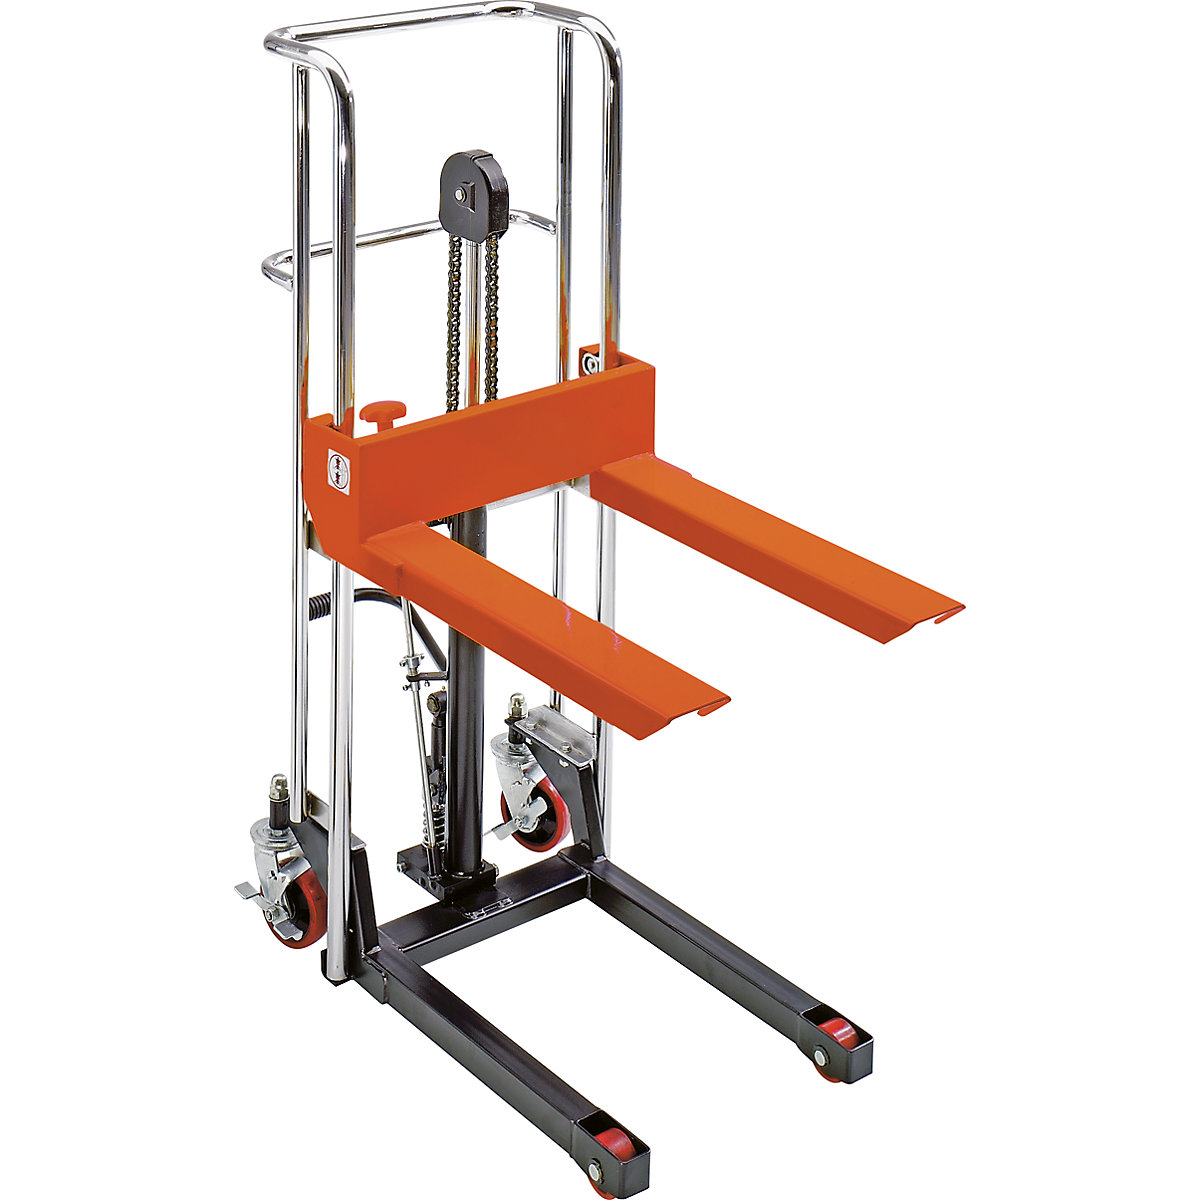 Budget stacker, pedal hydraulics, lifting range 85 – 765 mm